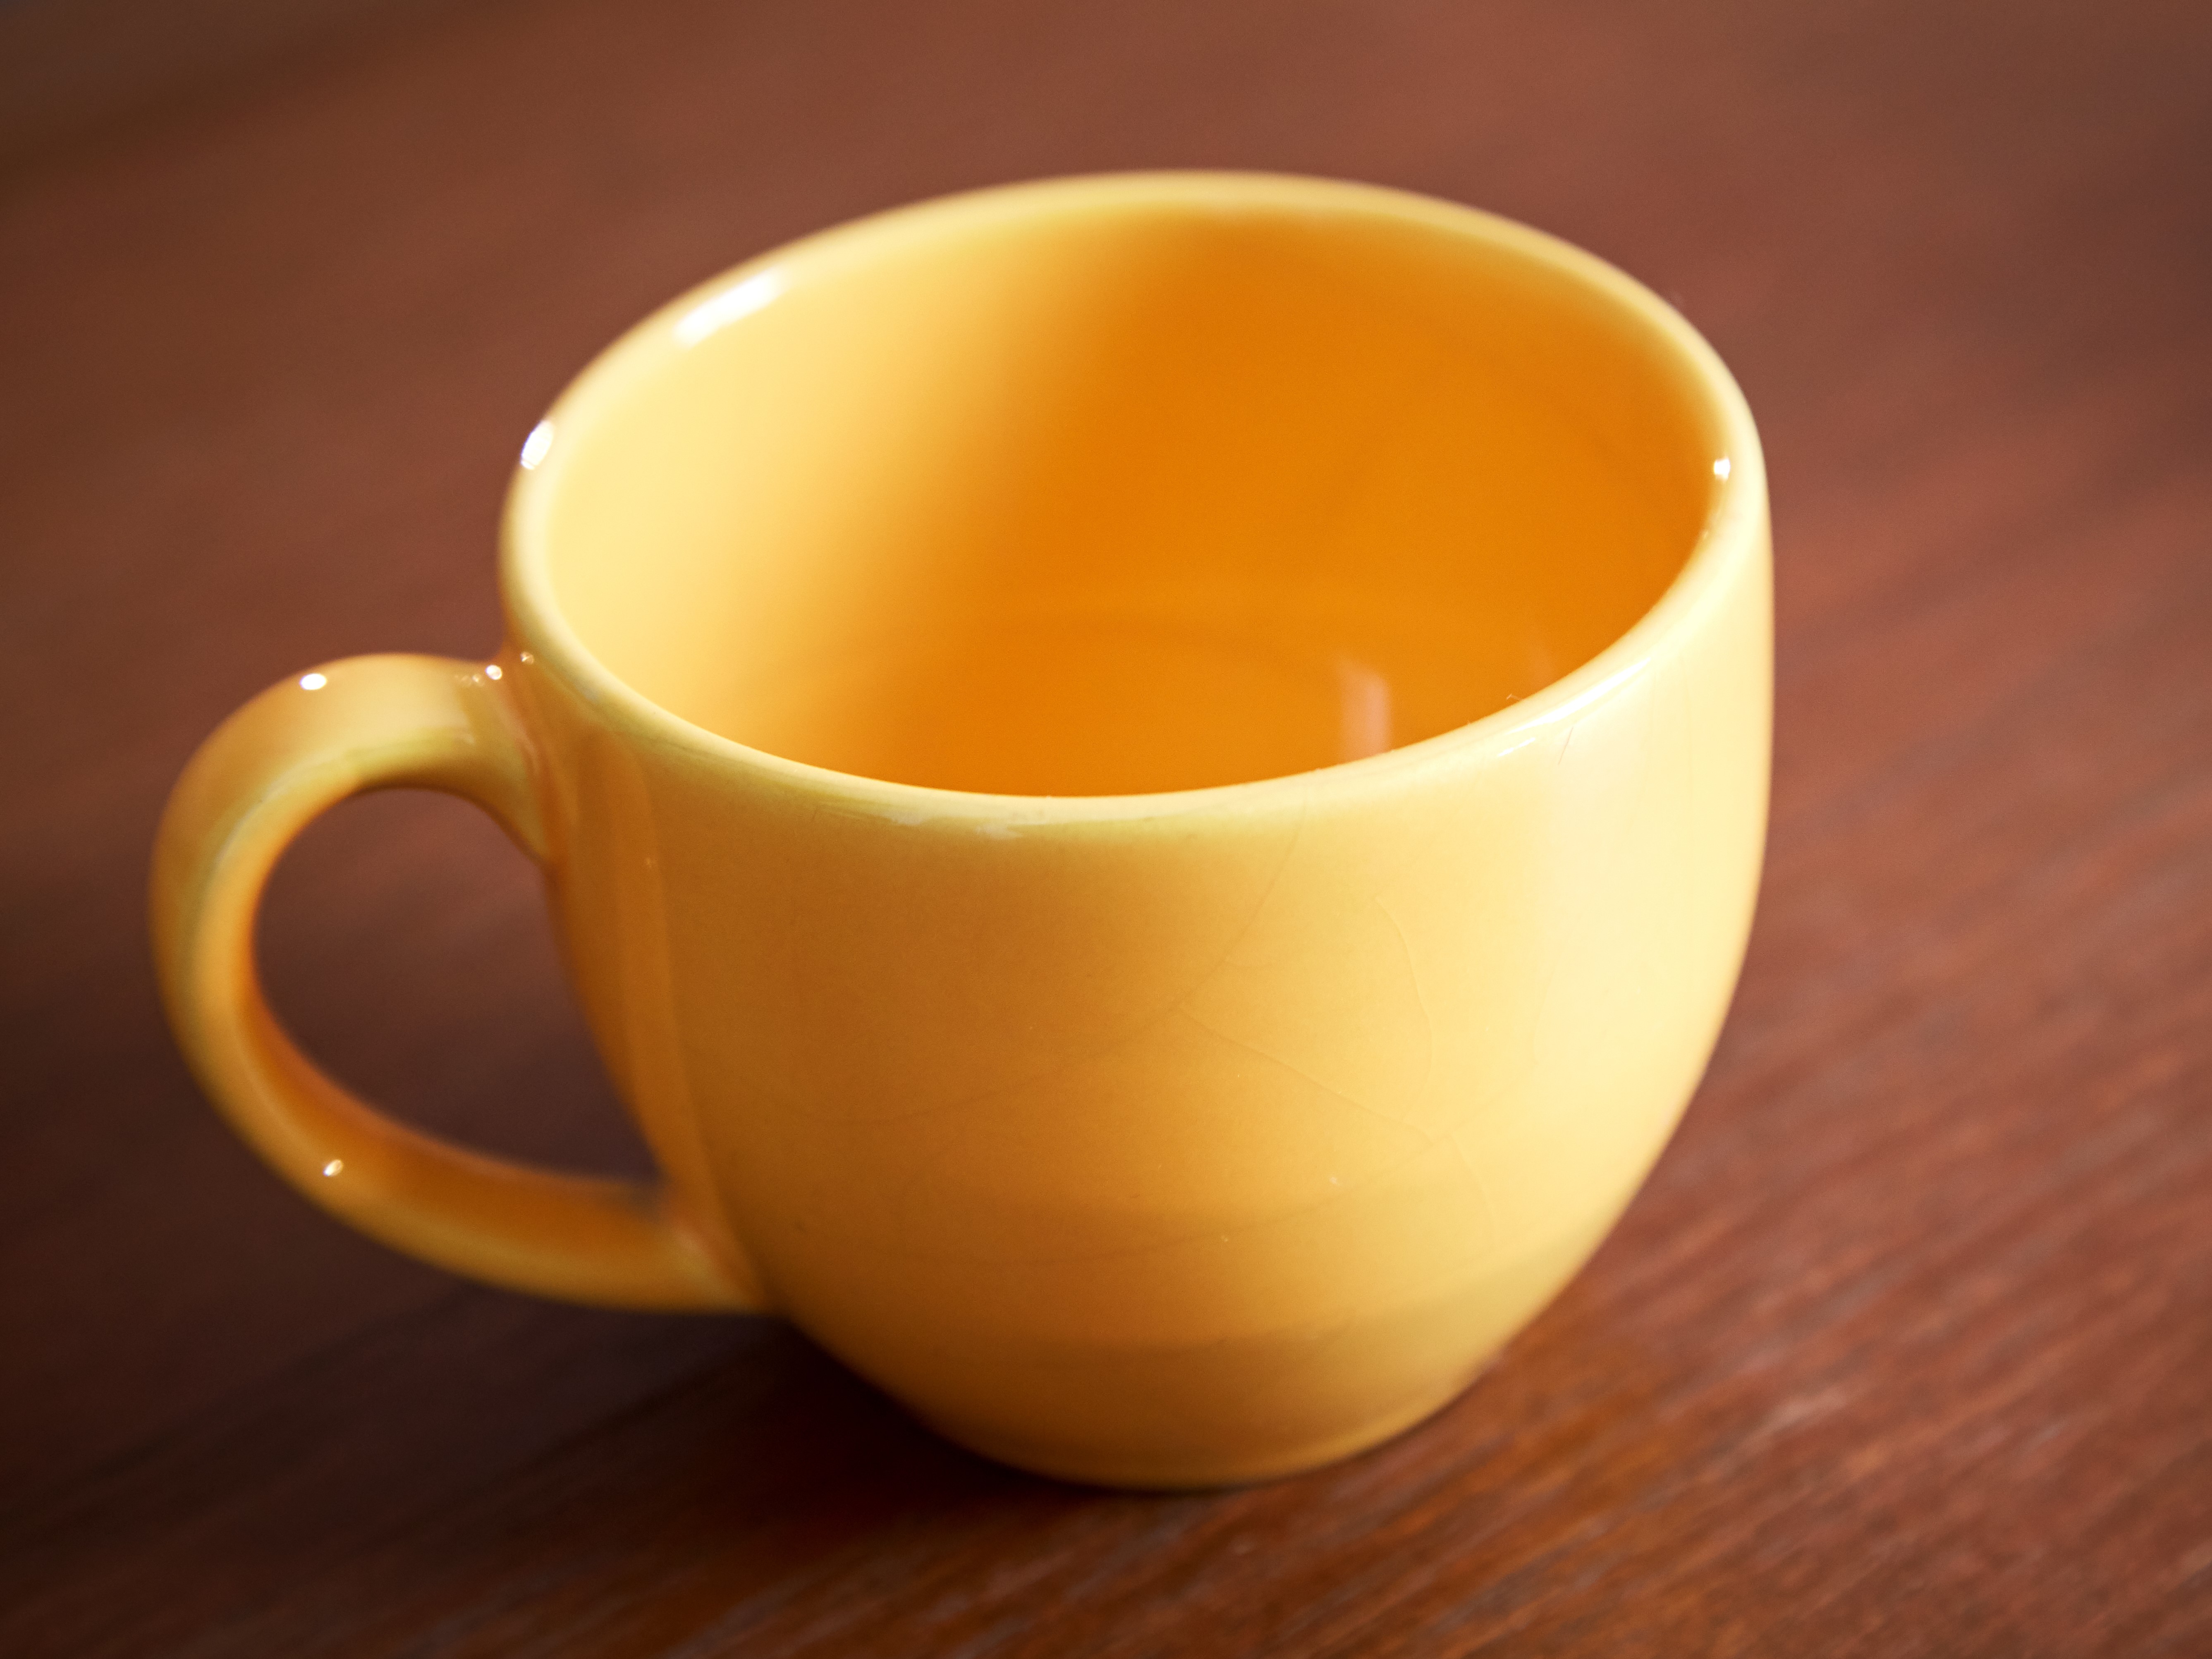 yellow ceramic mug on wooden surface